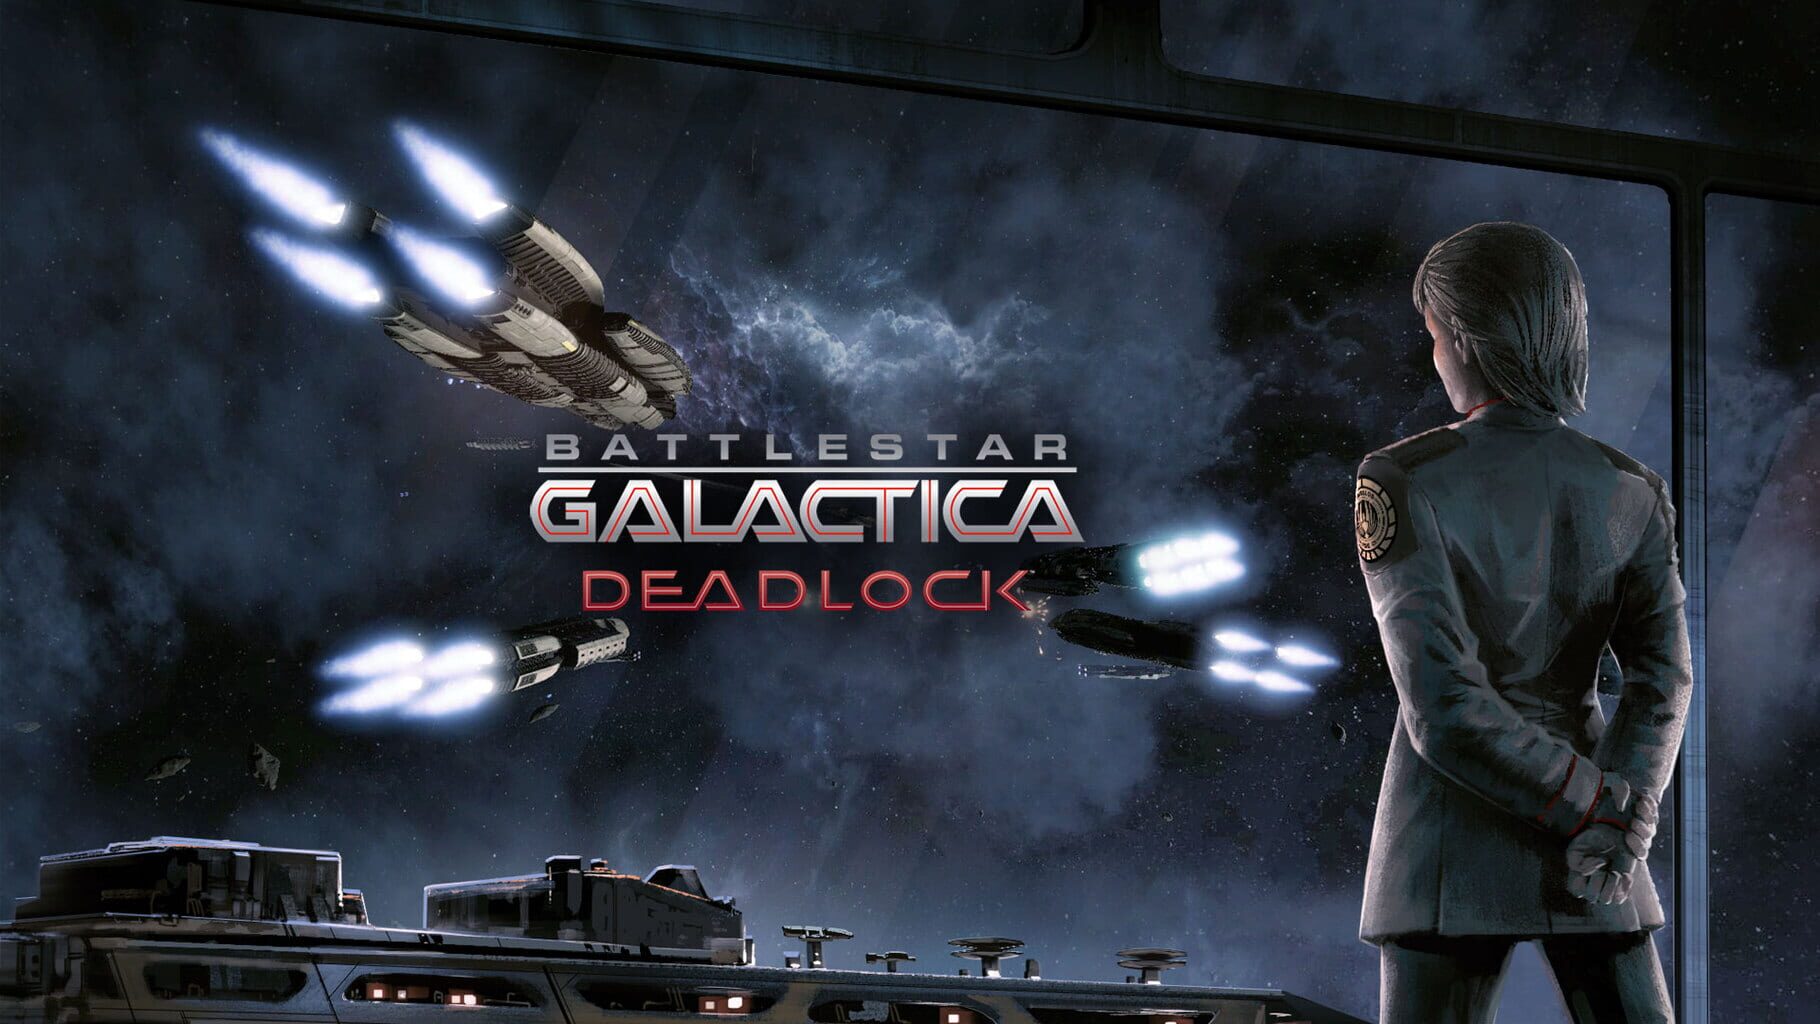 Battlestar Galactica Deadlock artwork